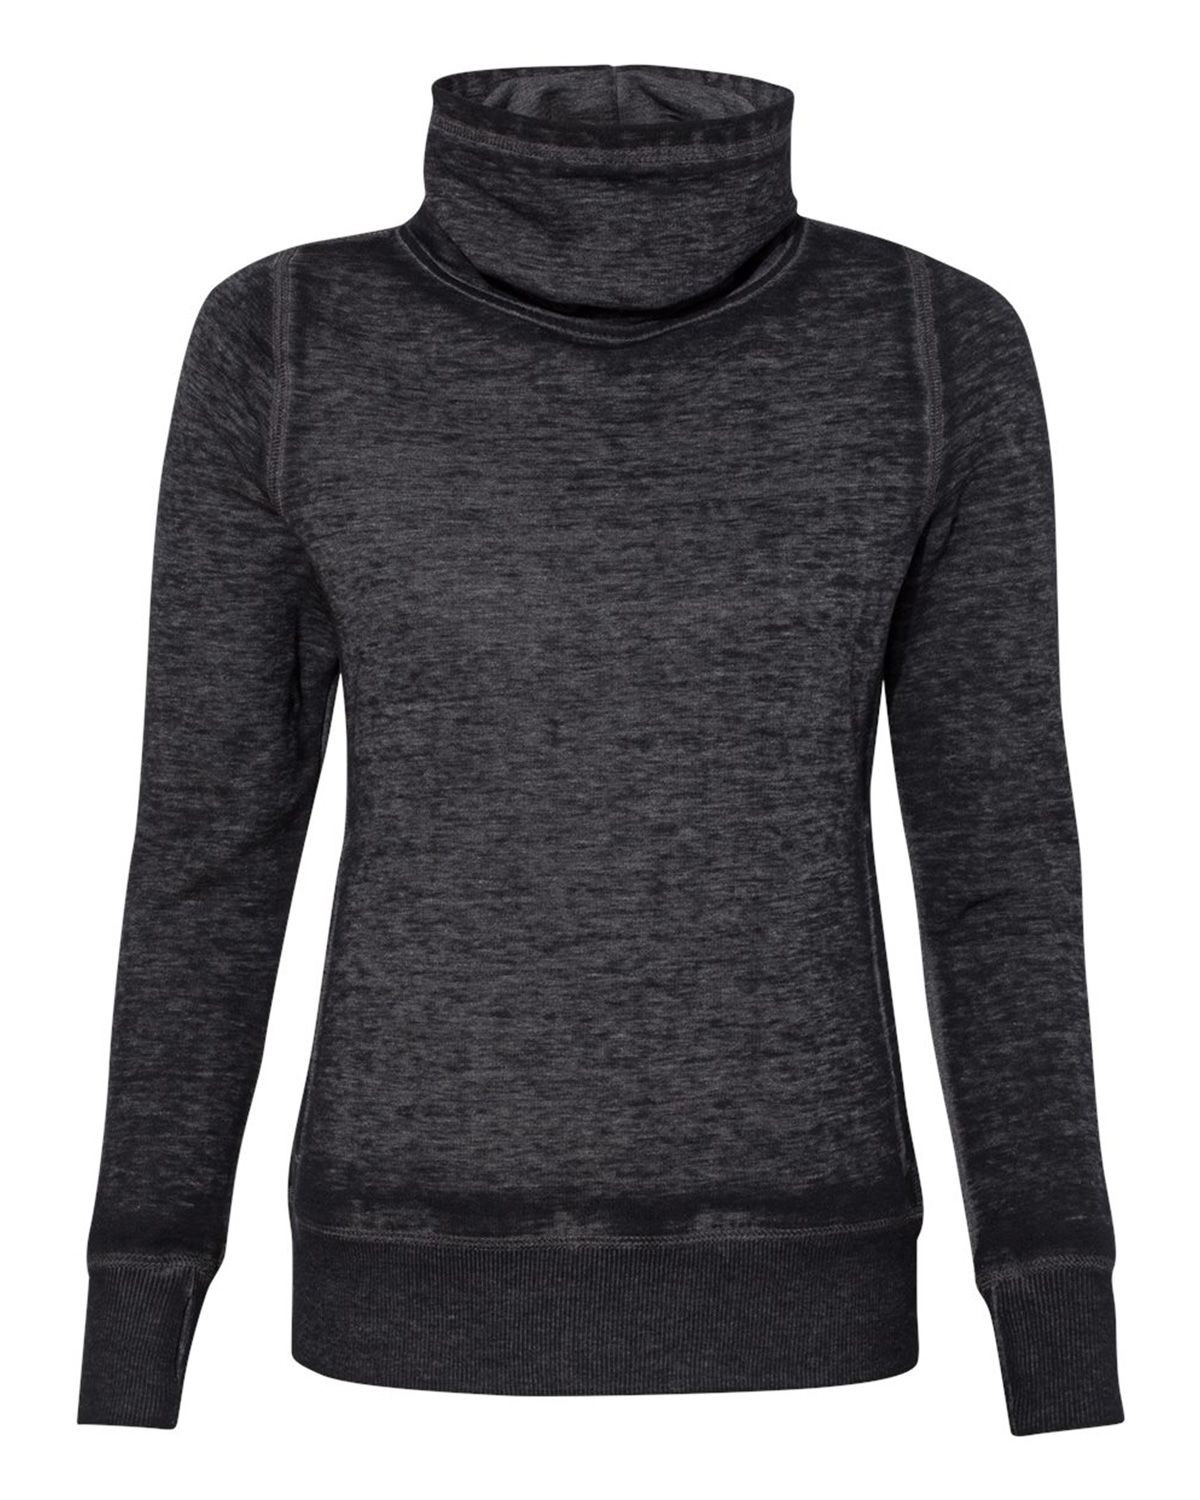 J America 8930 Women's Vintage Zen Fleece Cowl Neck Sweatshirt - Twisted Black - S #vintage